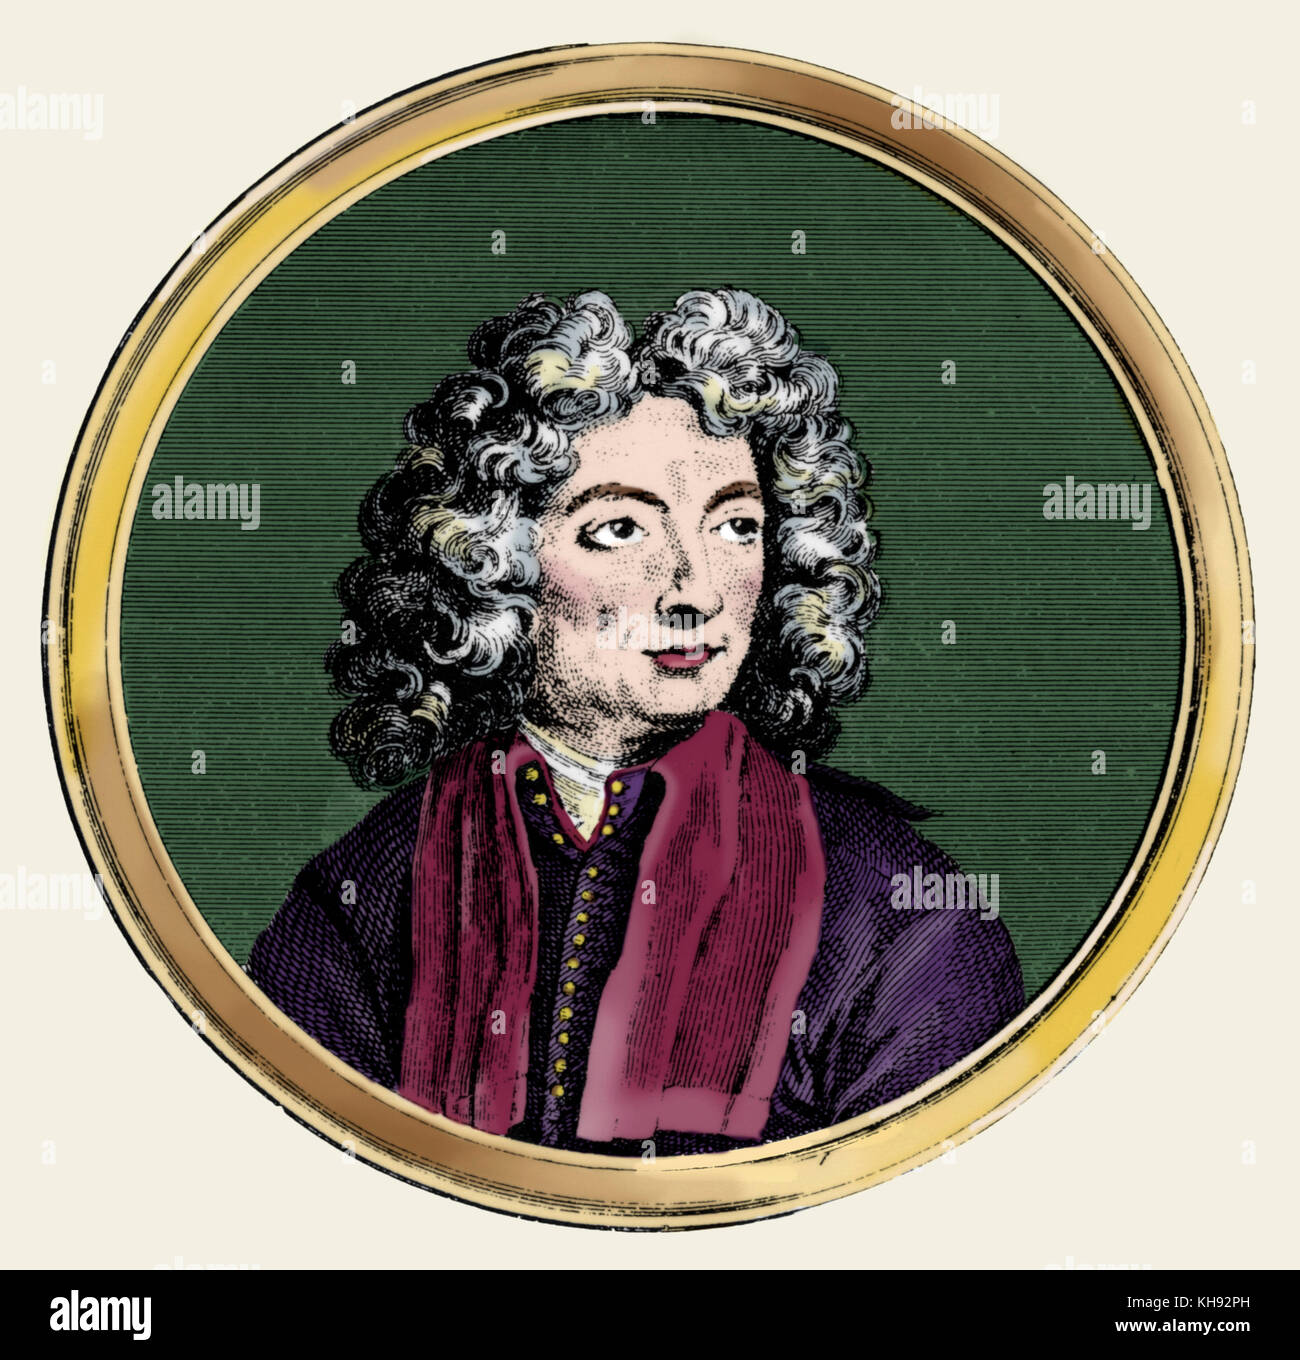 Arcangelo Corelli portrait. Italienischer Komponist und Violinist. 17 Februar 1653 - 8. Januar 1713 Stockfoto